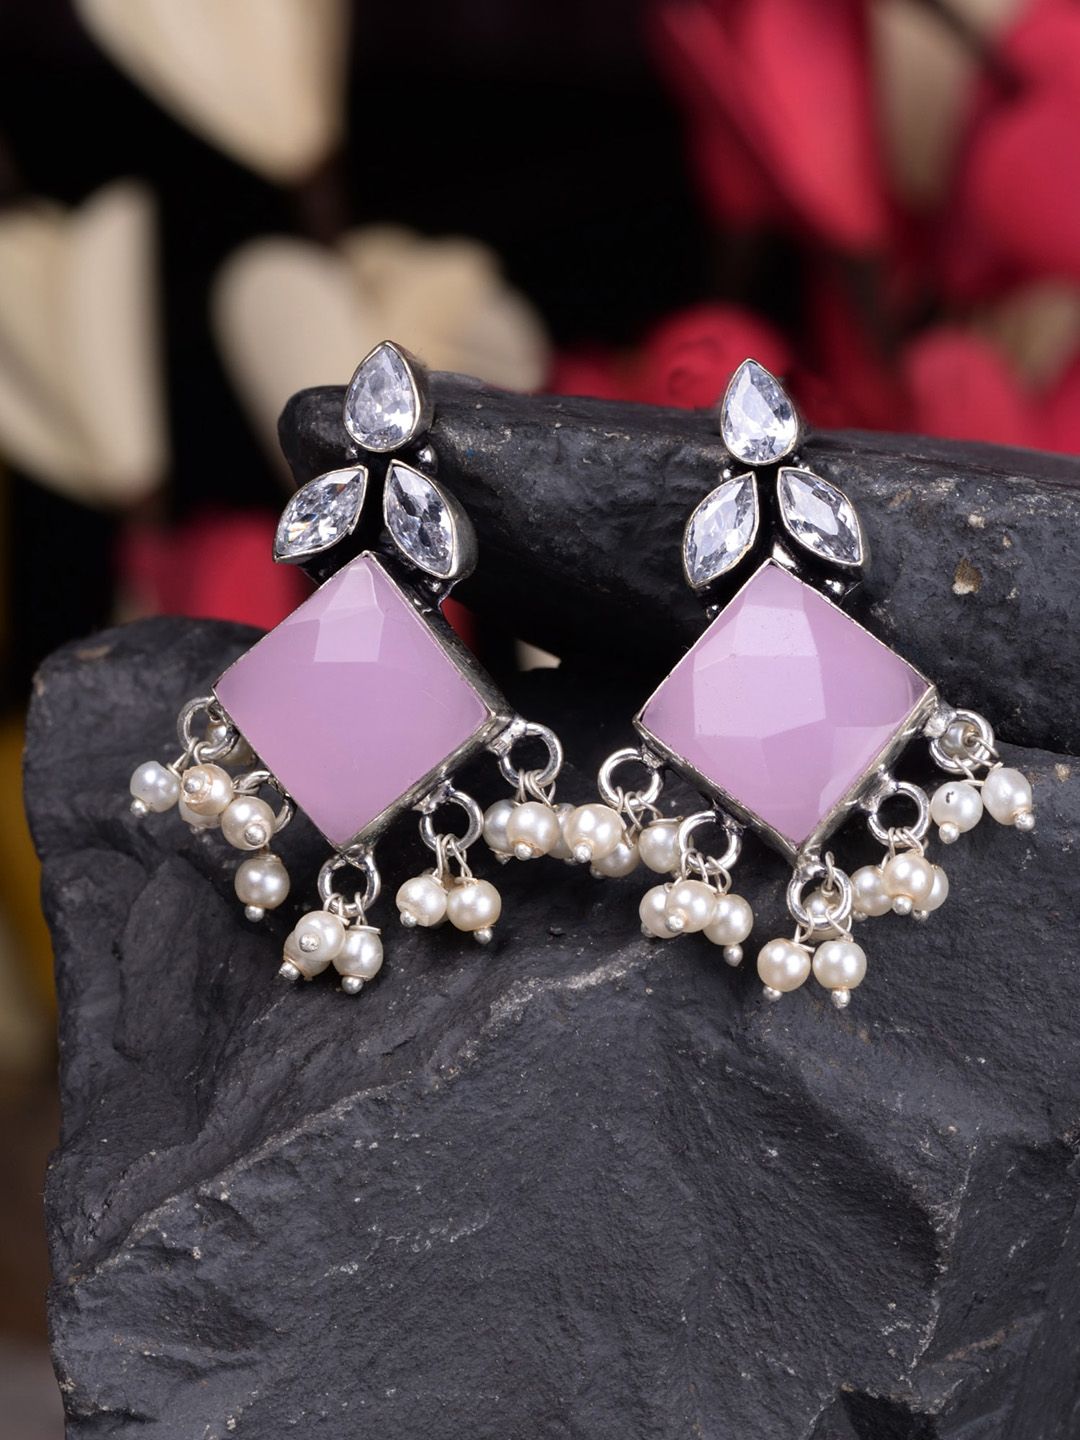 Saraf RS Jewellery Pink Triangular Drop Earrings Price in India